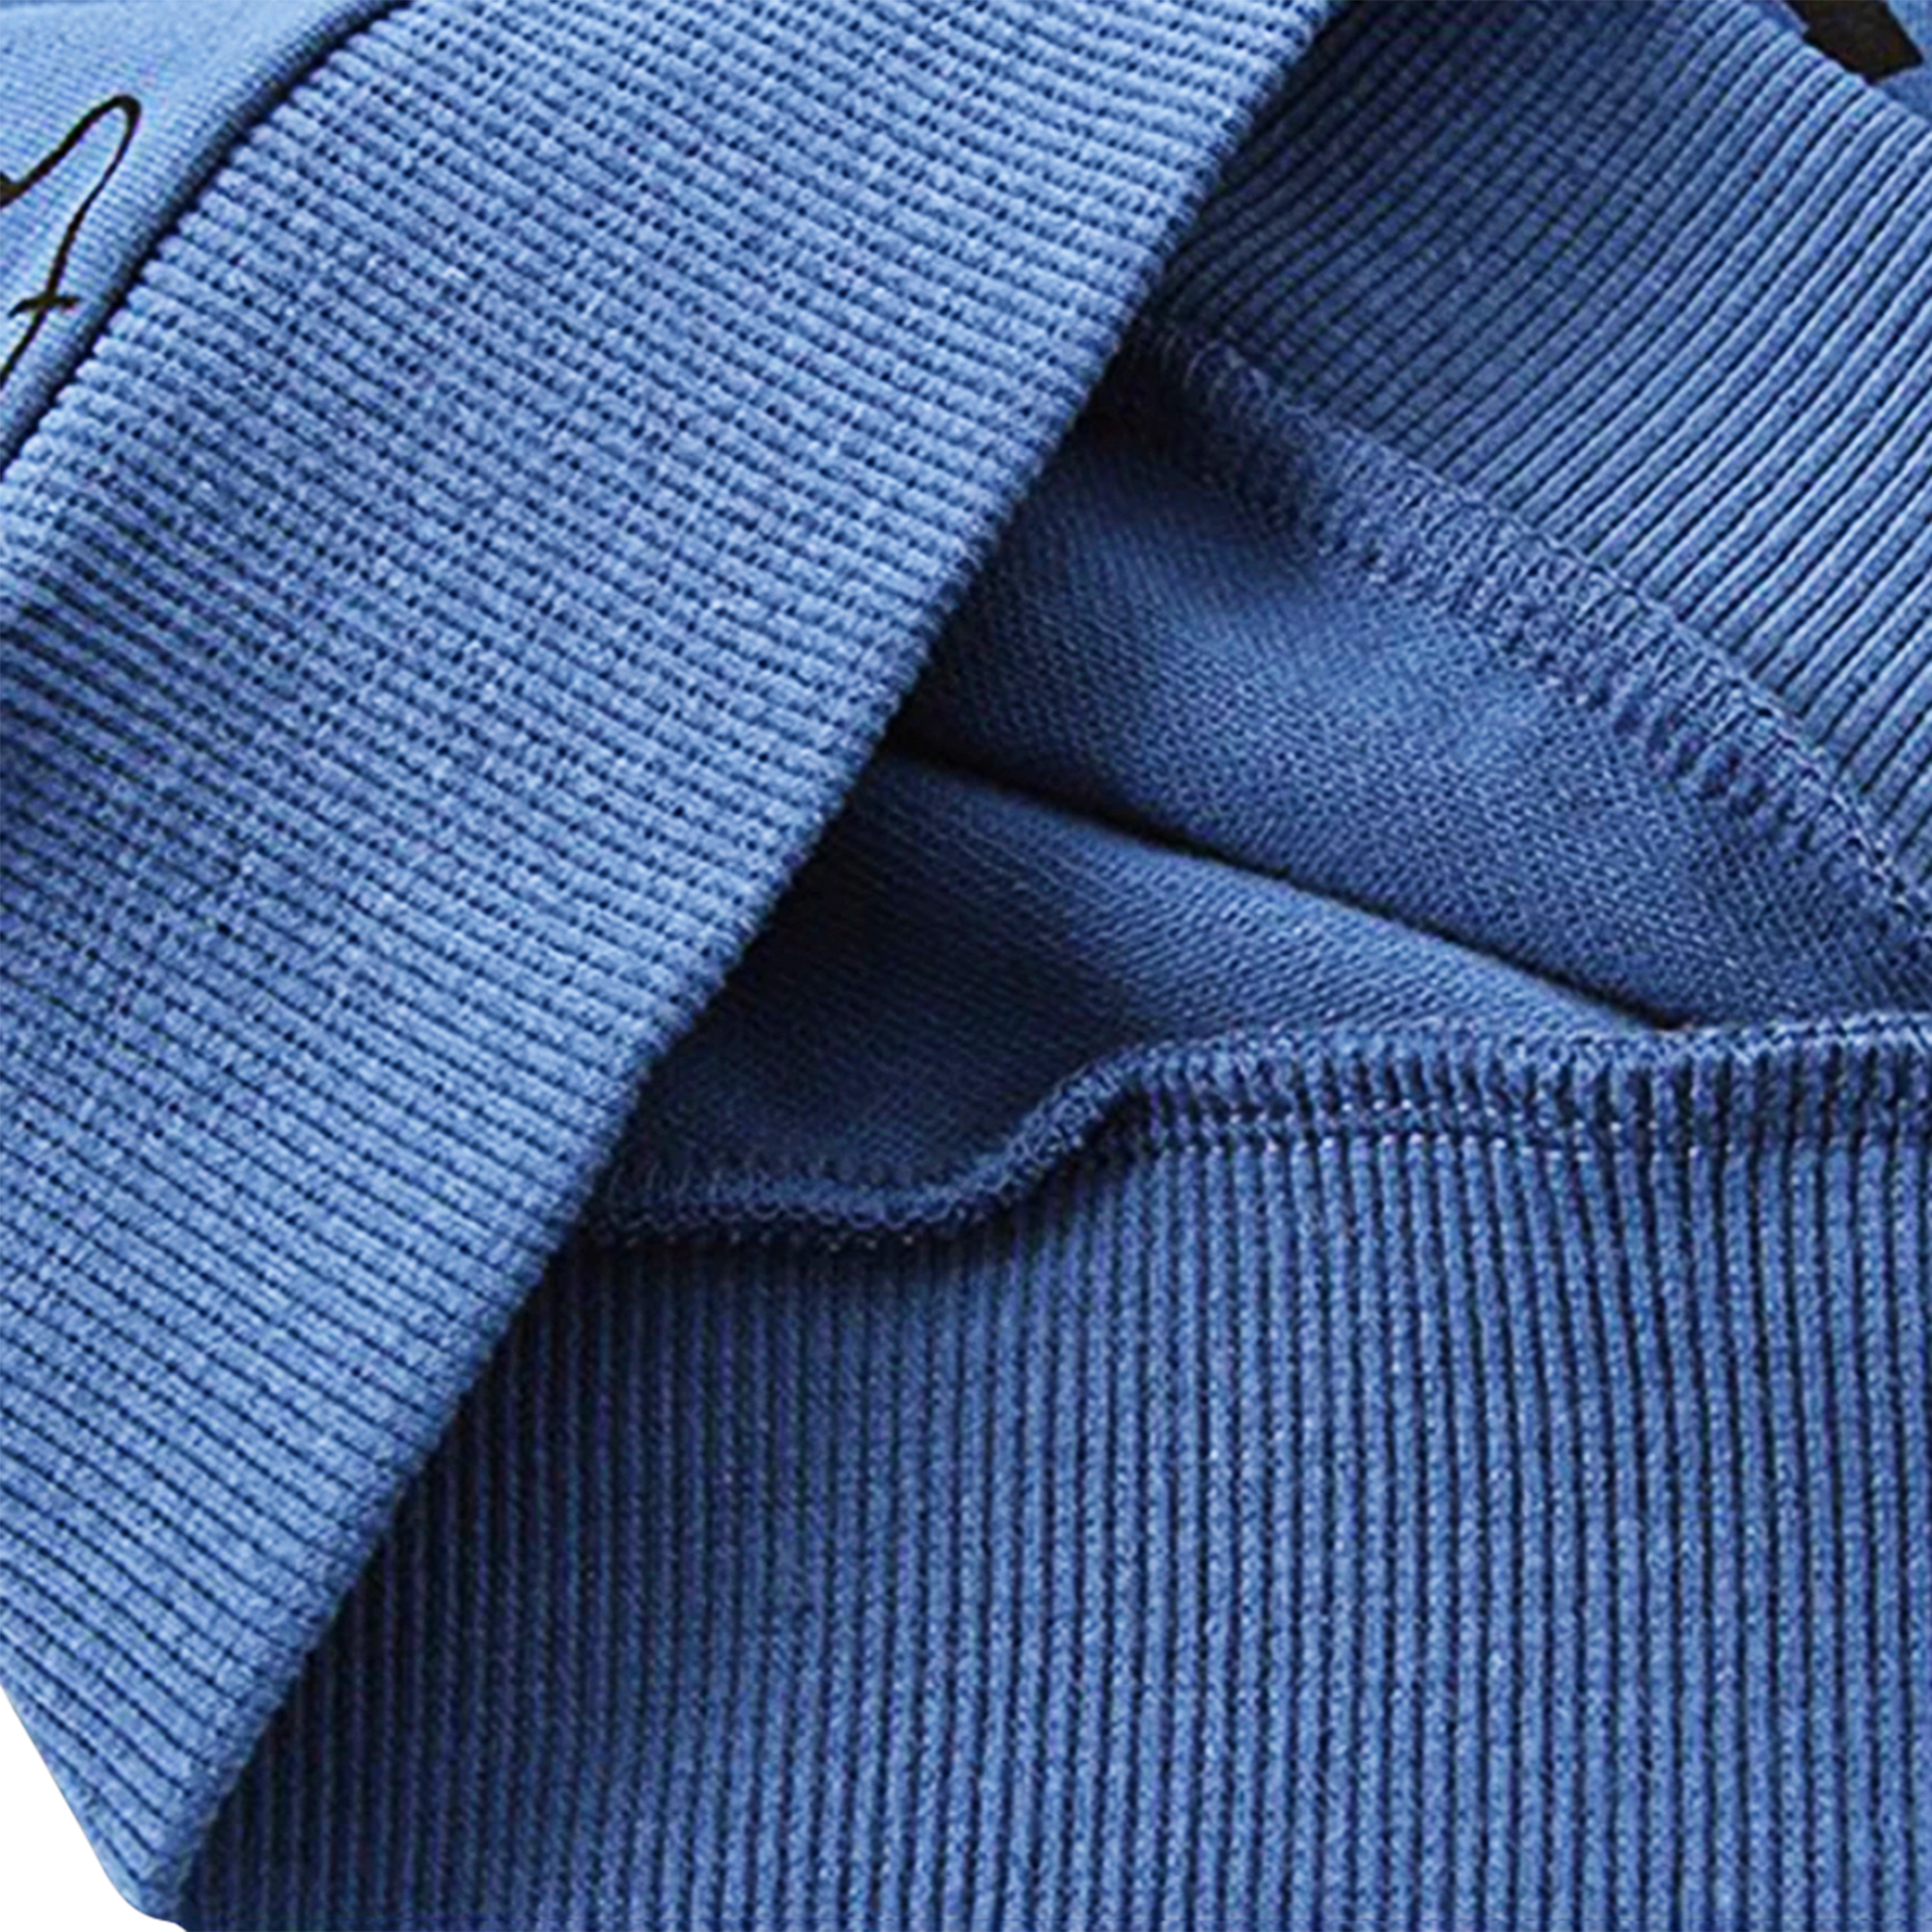 Boys' Blue Dino Long Sleeve Sweatshirt & Pant Set